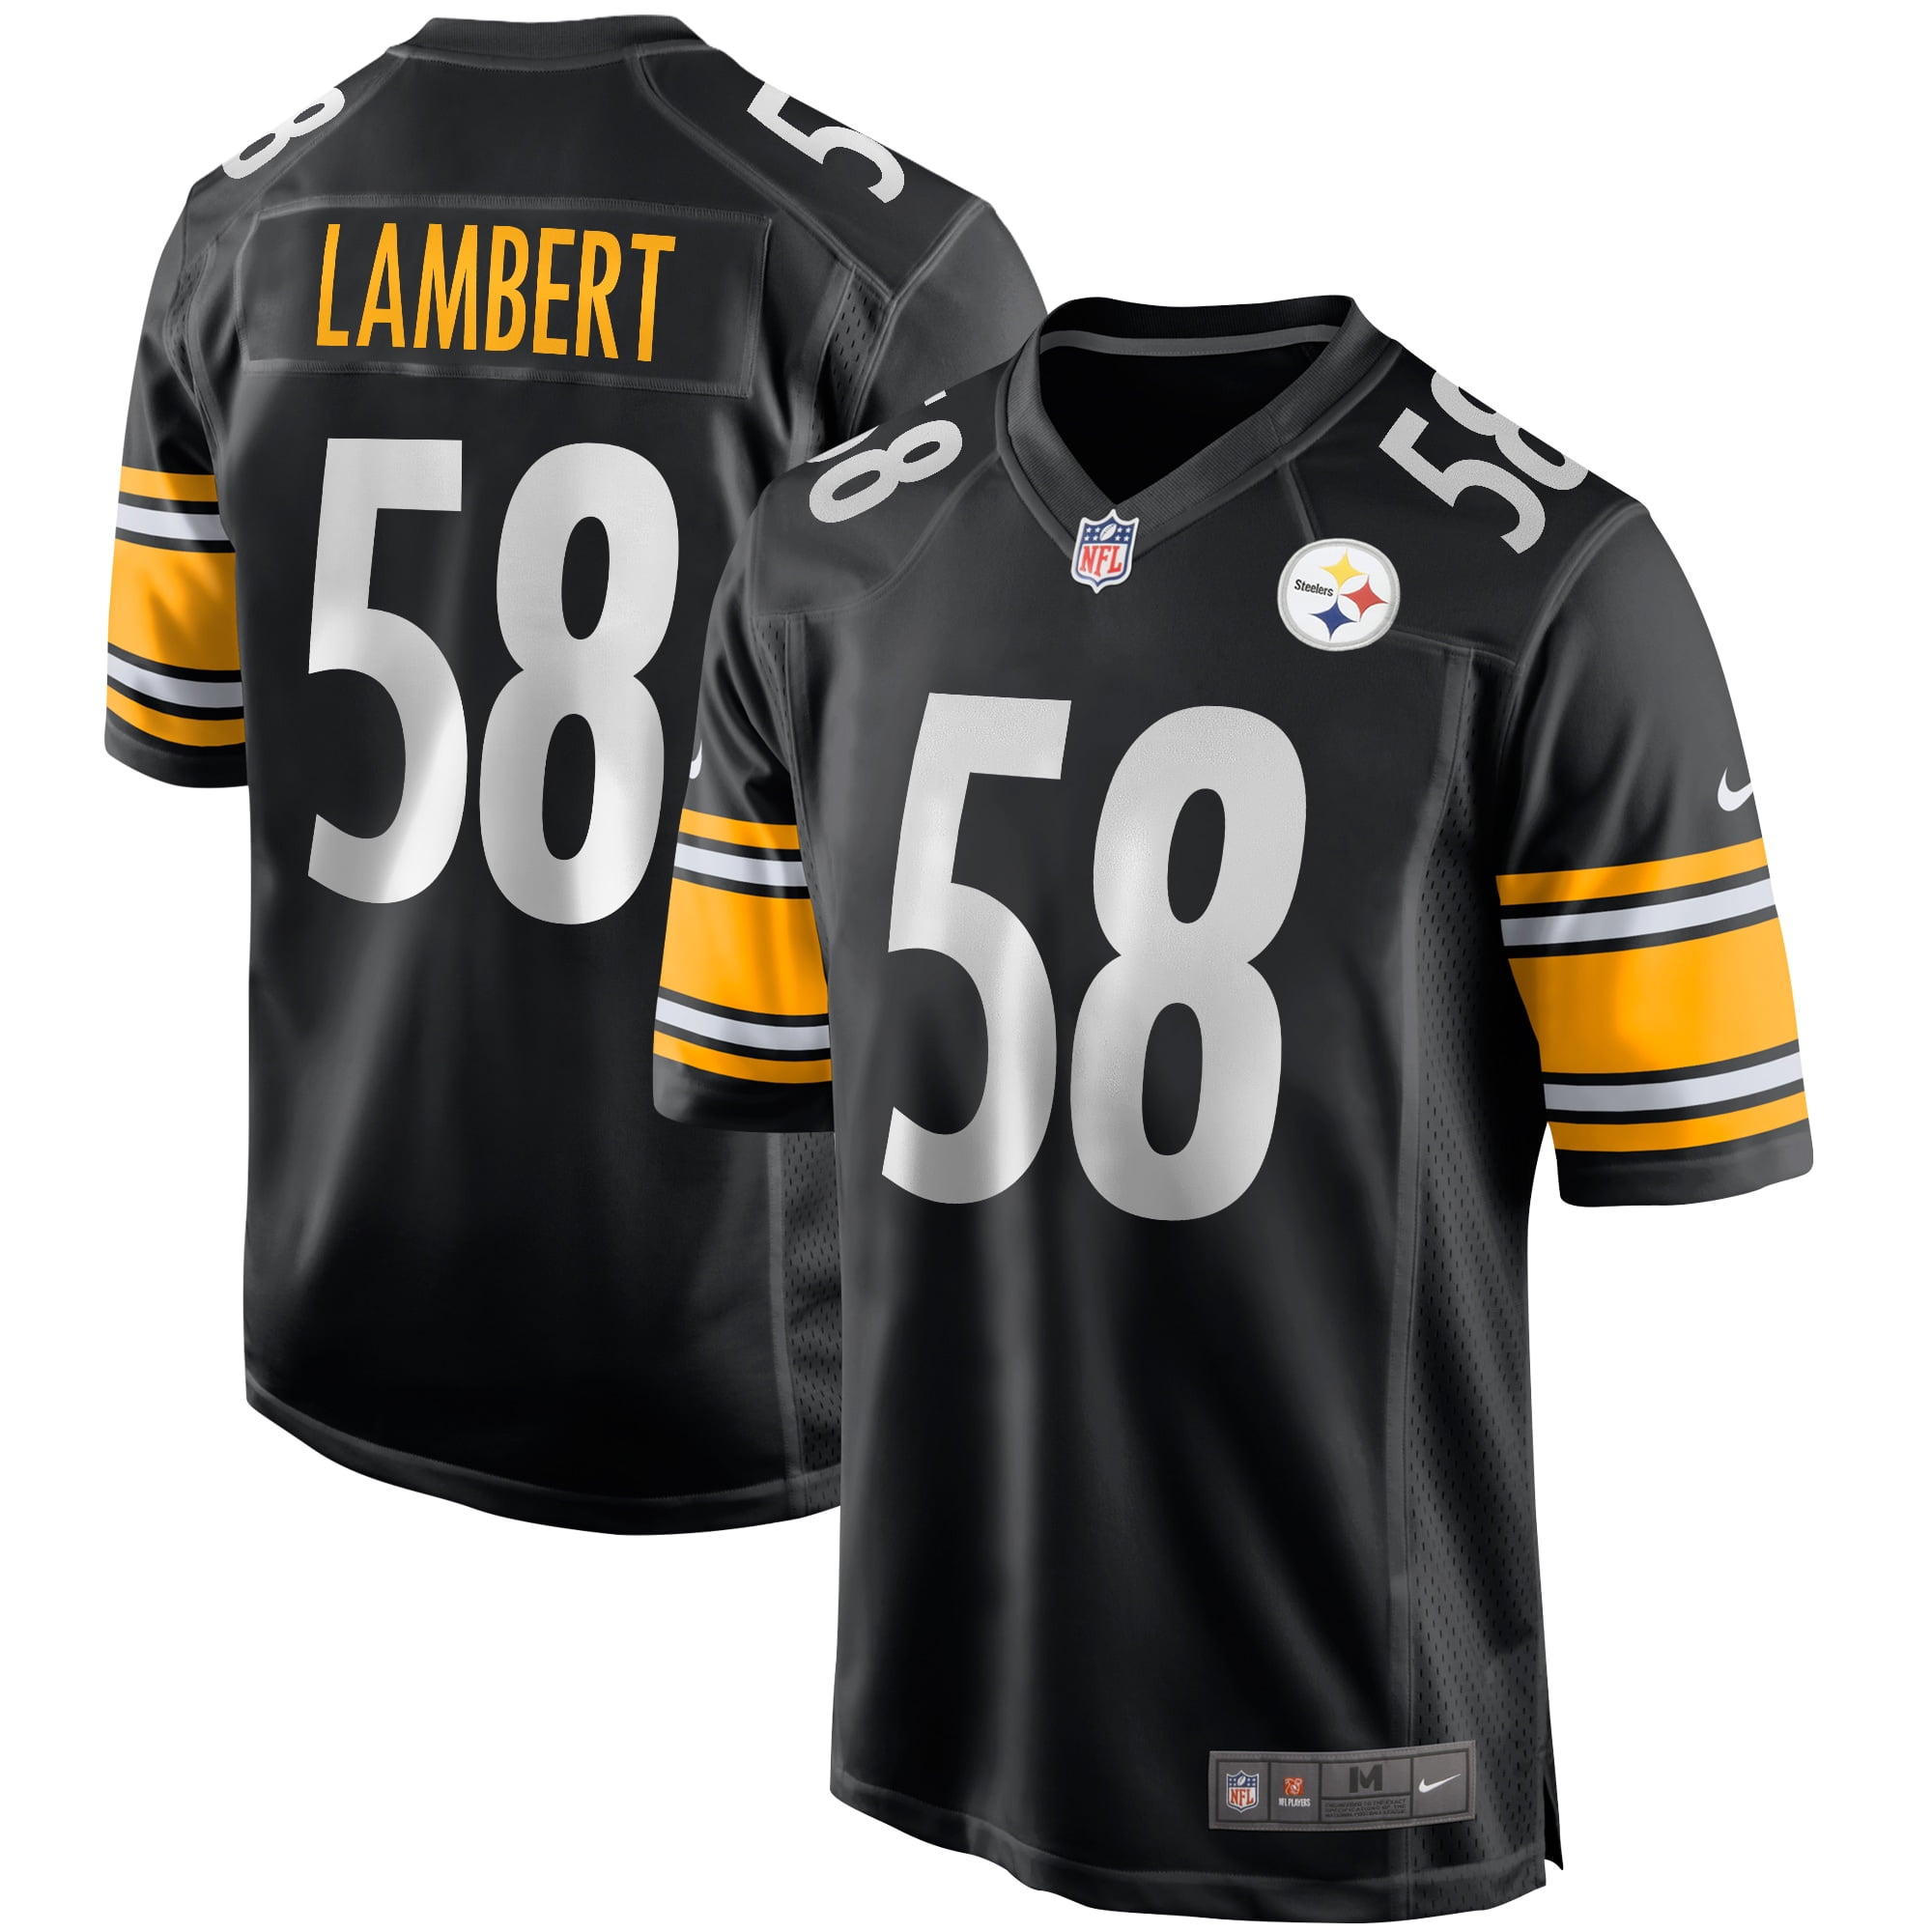 Jack Lambert Pittsburgh Steelers Nike Game Retired Player Jersey - Black - Walmart.com ...